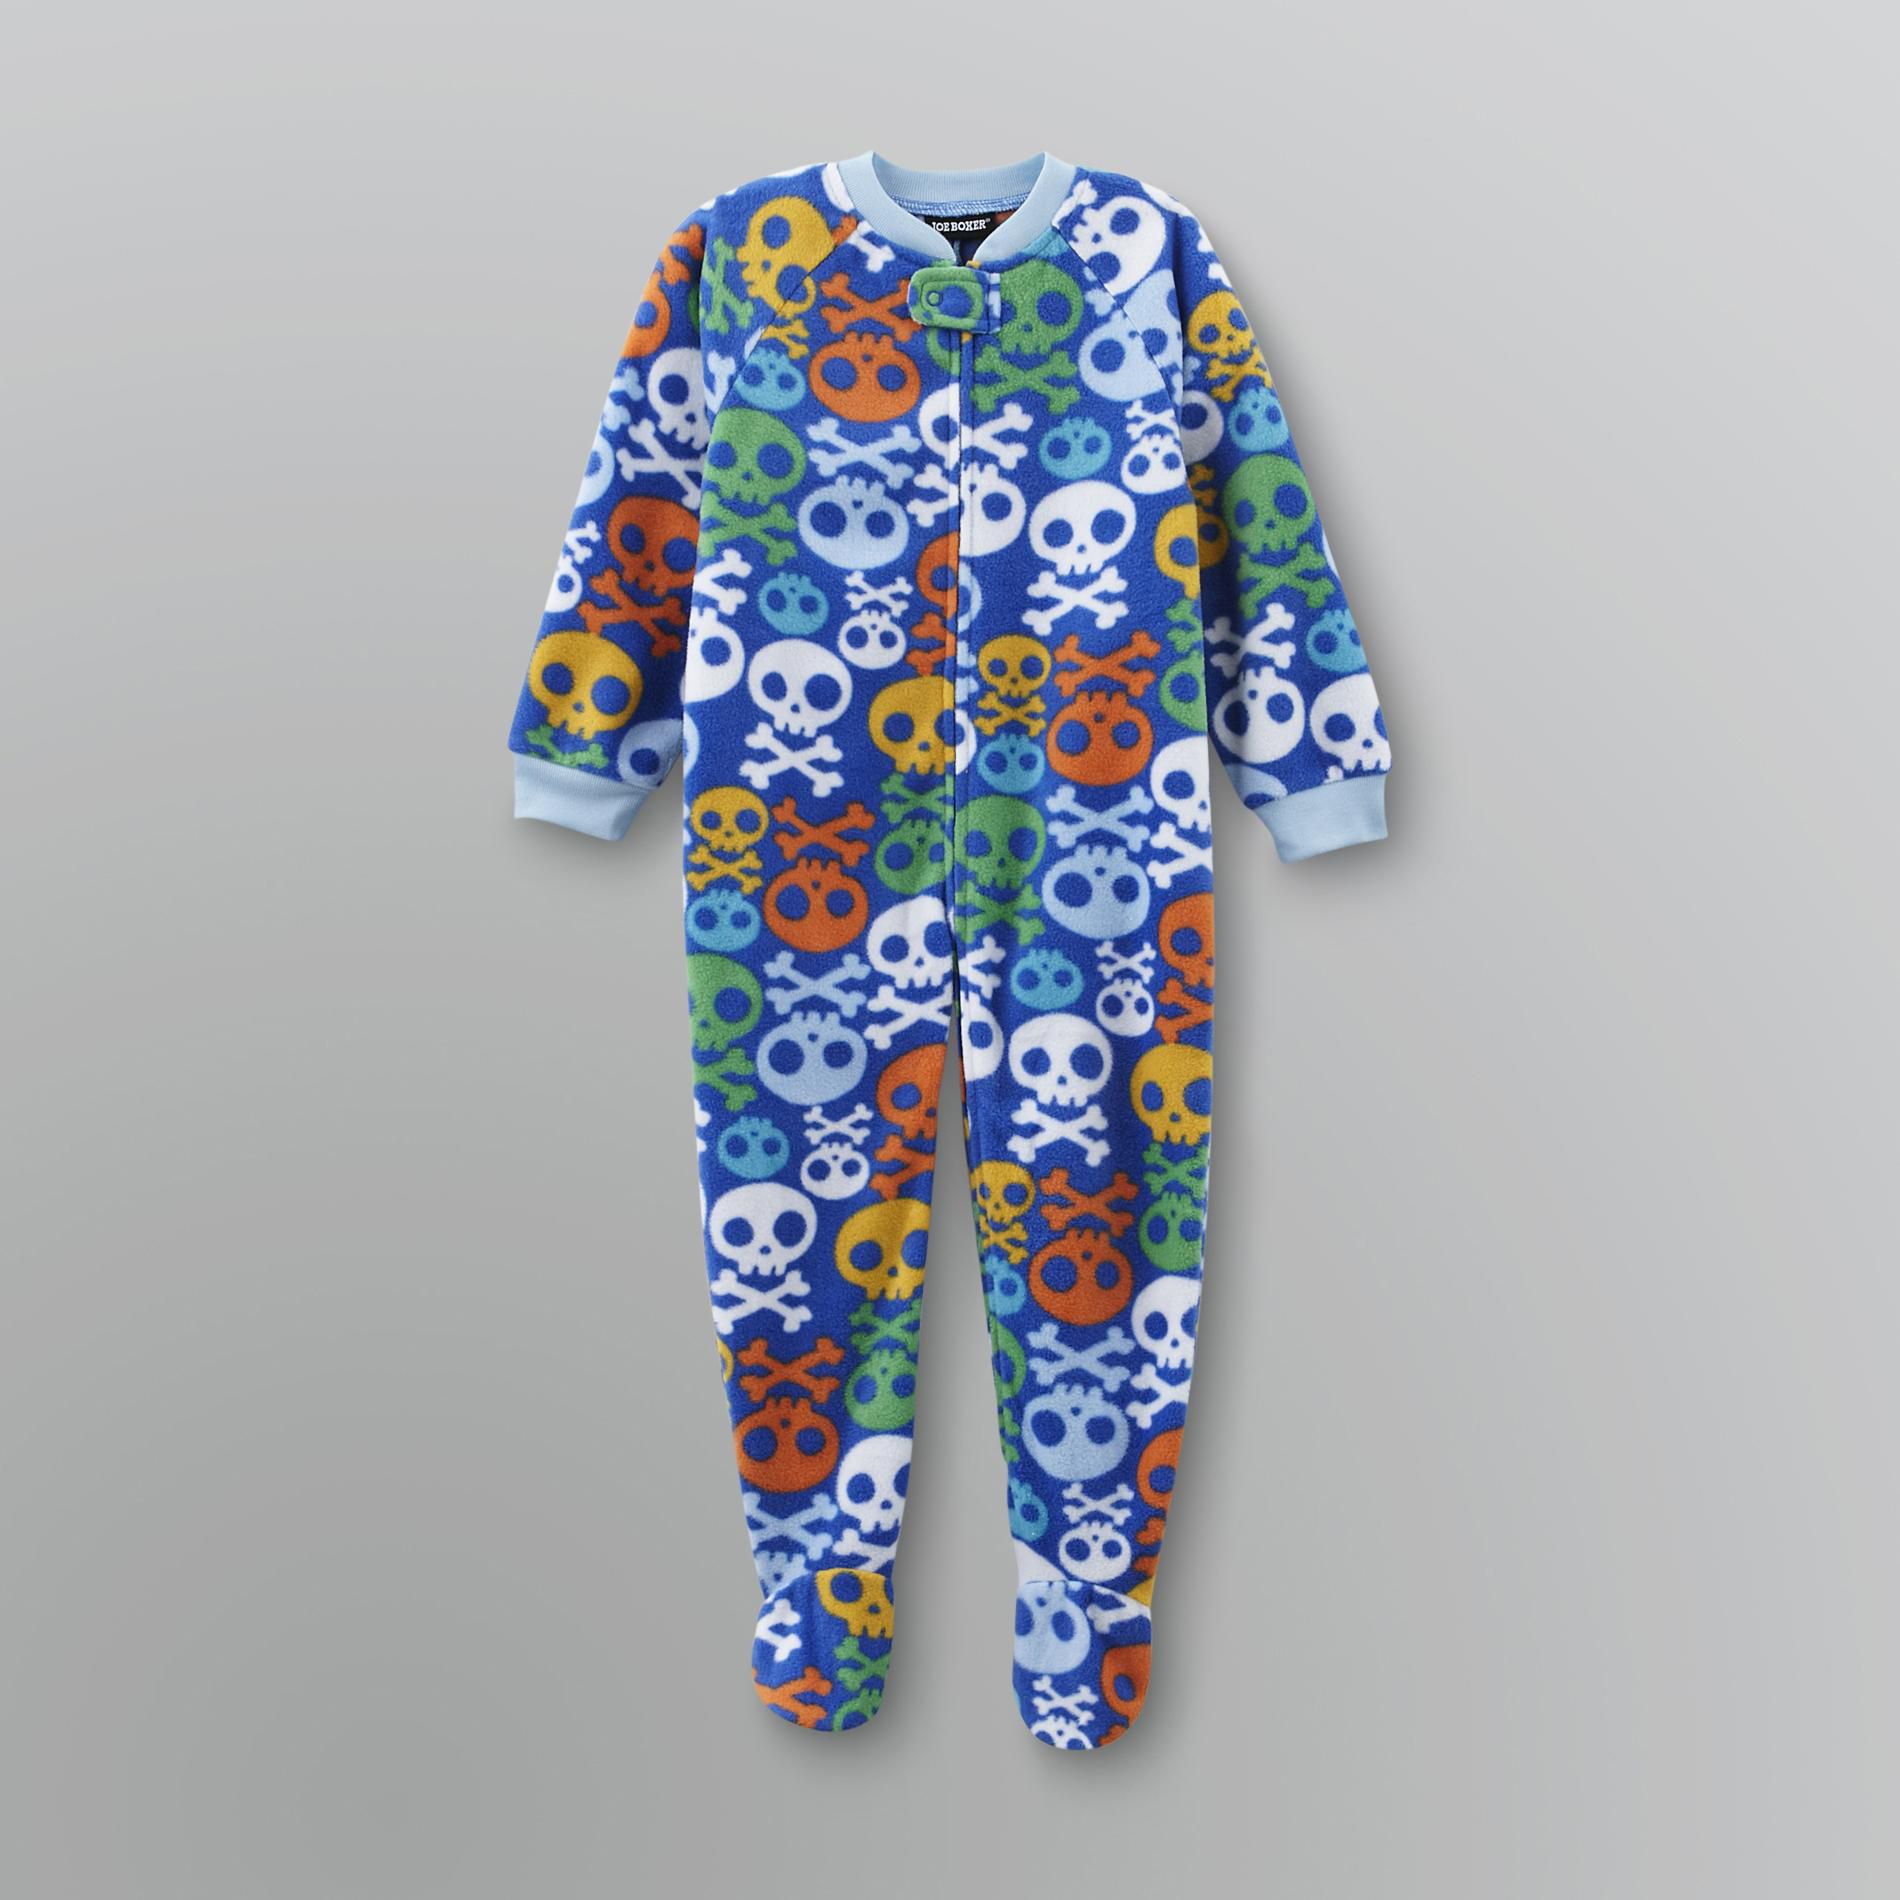 Joe Boxer Infant & Toddler Boy's Fleece Footed Pajamas - Skulls